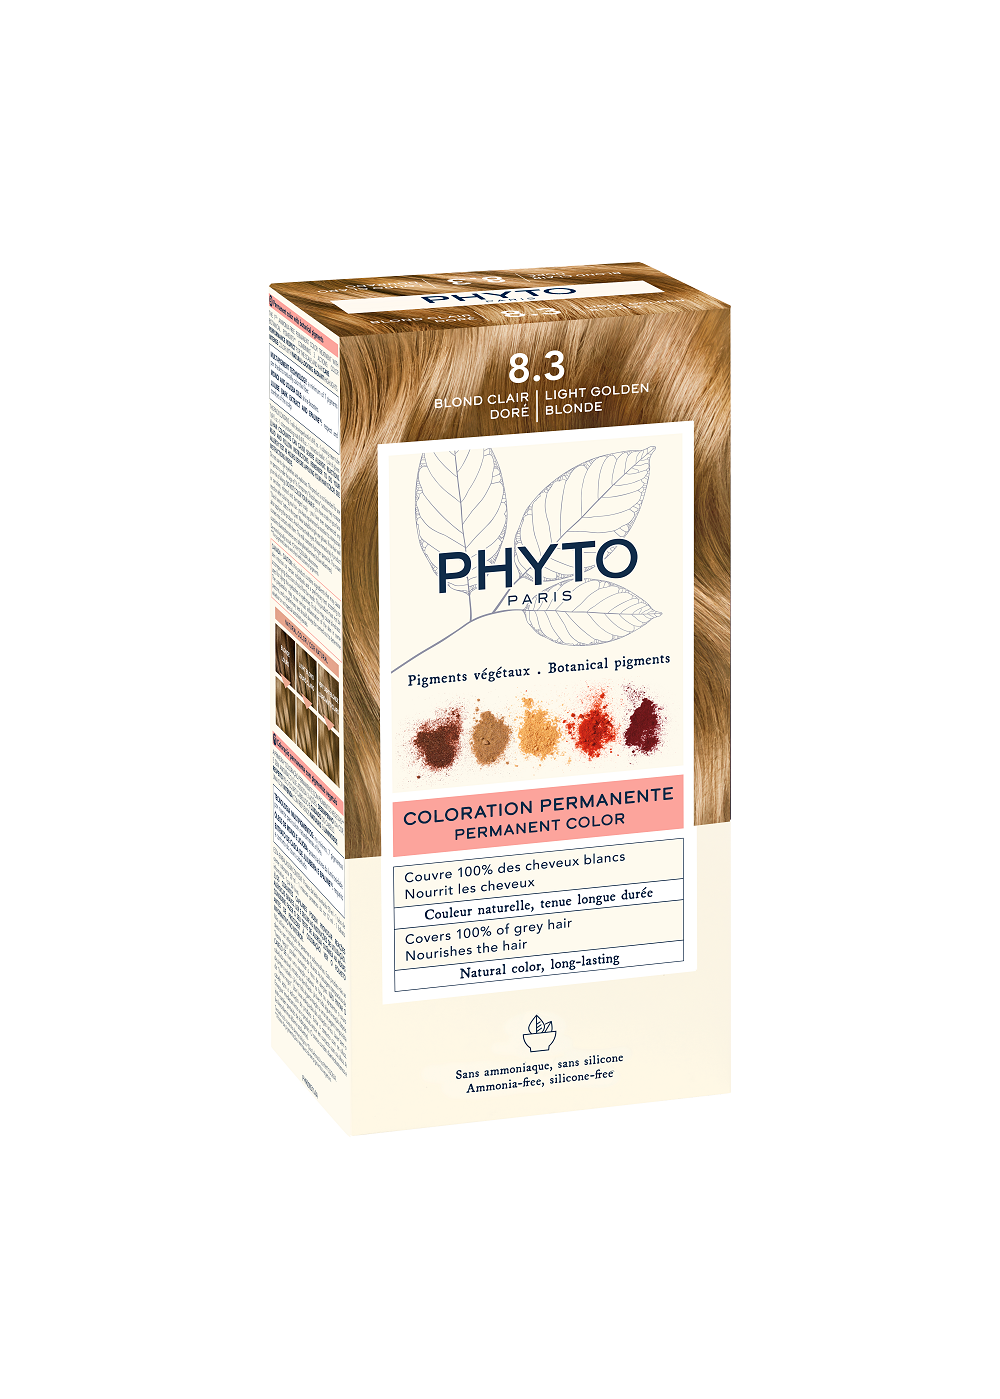 New Phytocolor 8.3 Light Golden Blonde